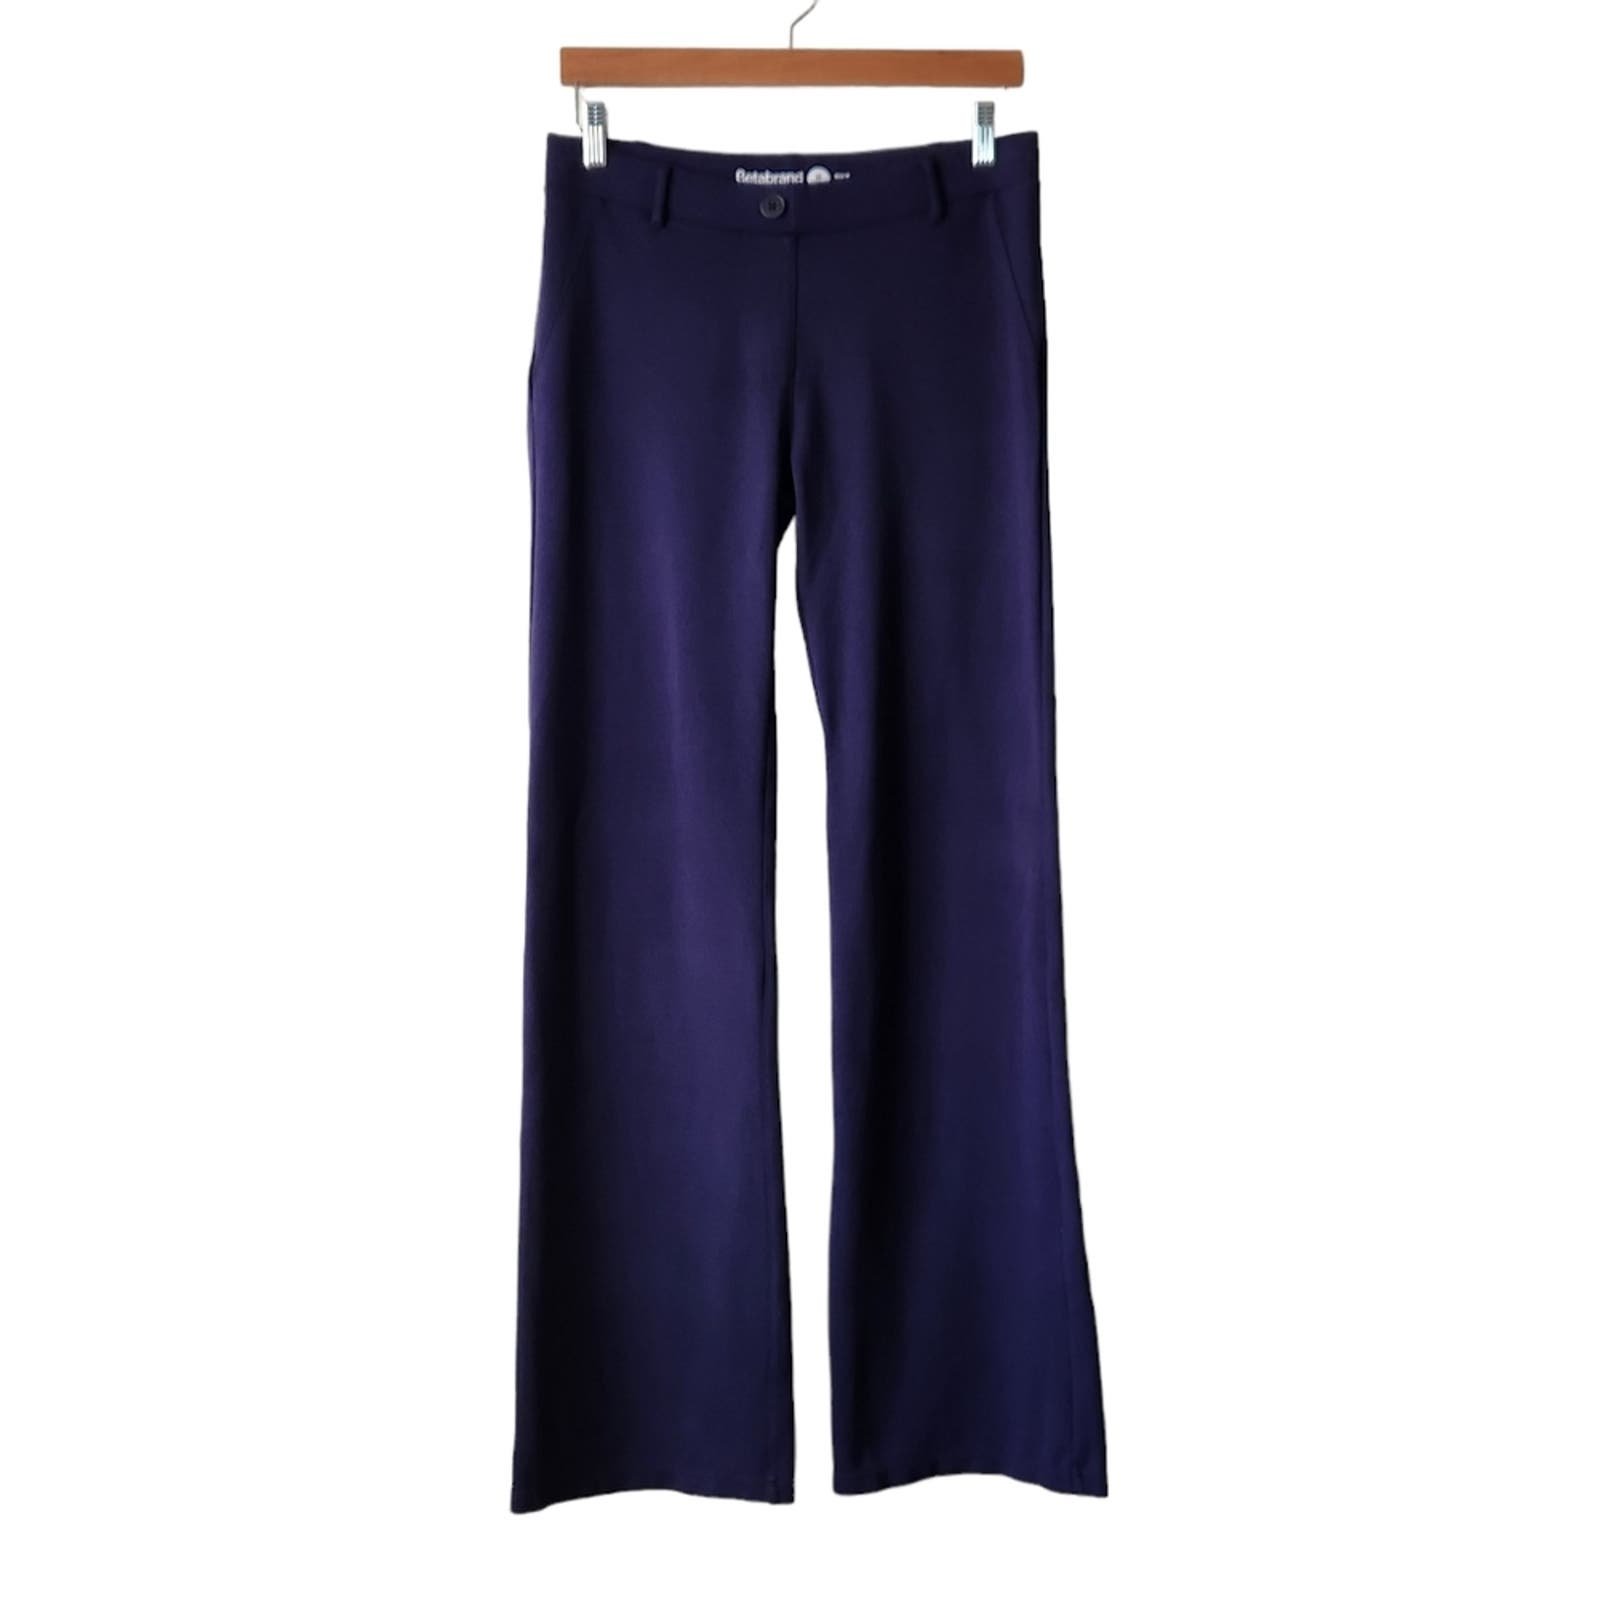 Amazing Betabrand Classic Dress Yoga Pants Navy w-0104-NY Size Medium. k2TPHSmmS Hot Sale